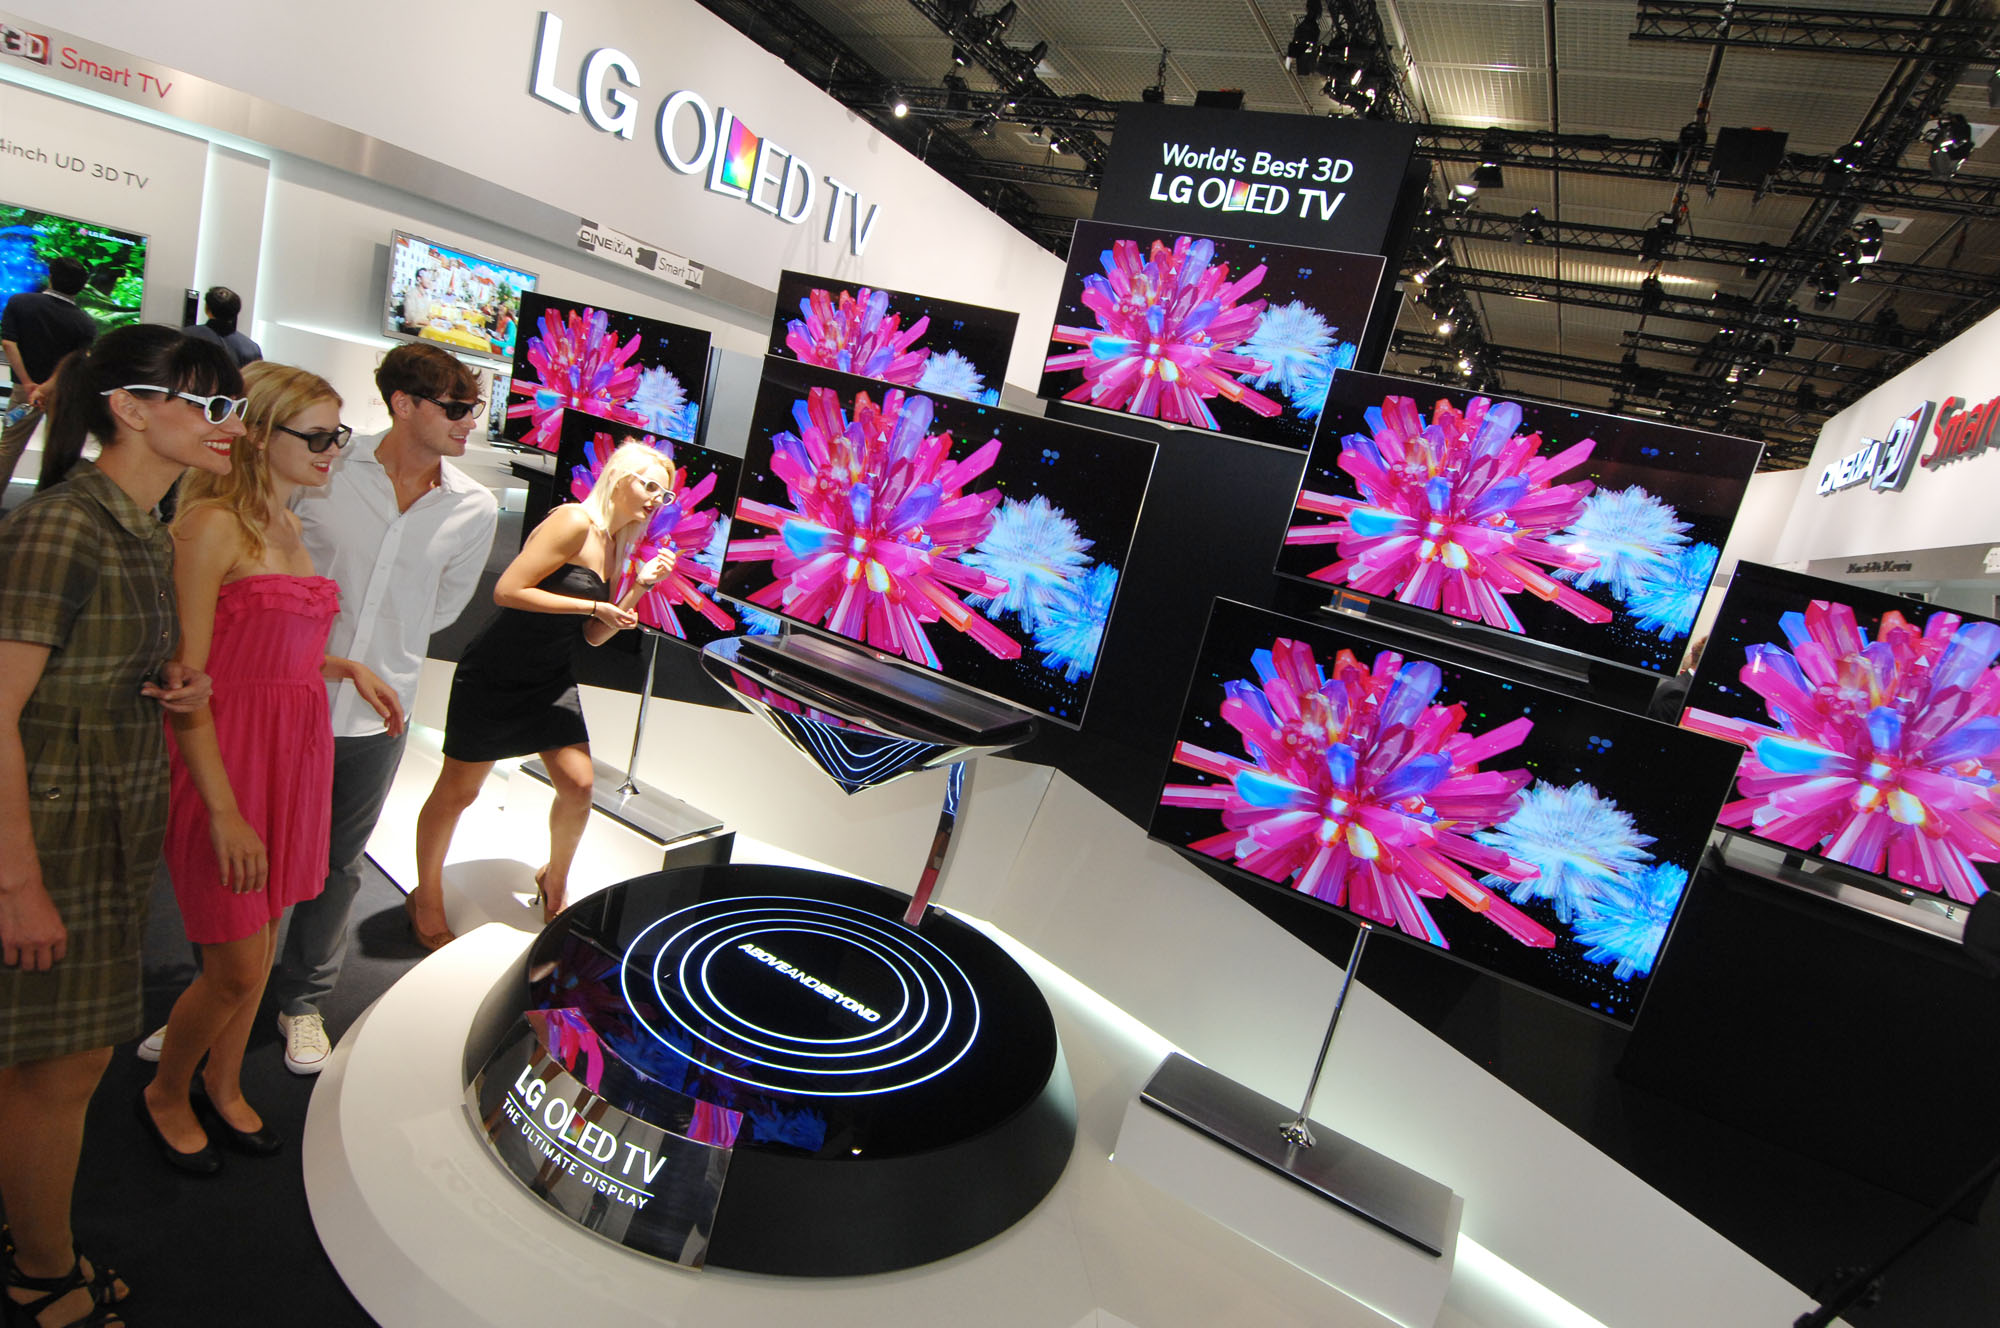 LG OLED TV at IFA 2012 (1)